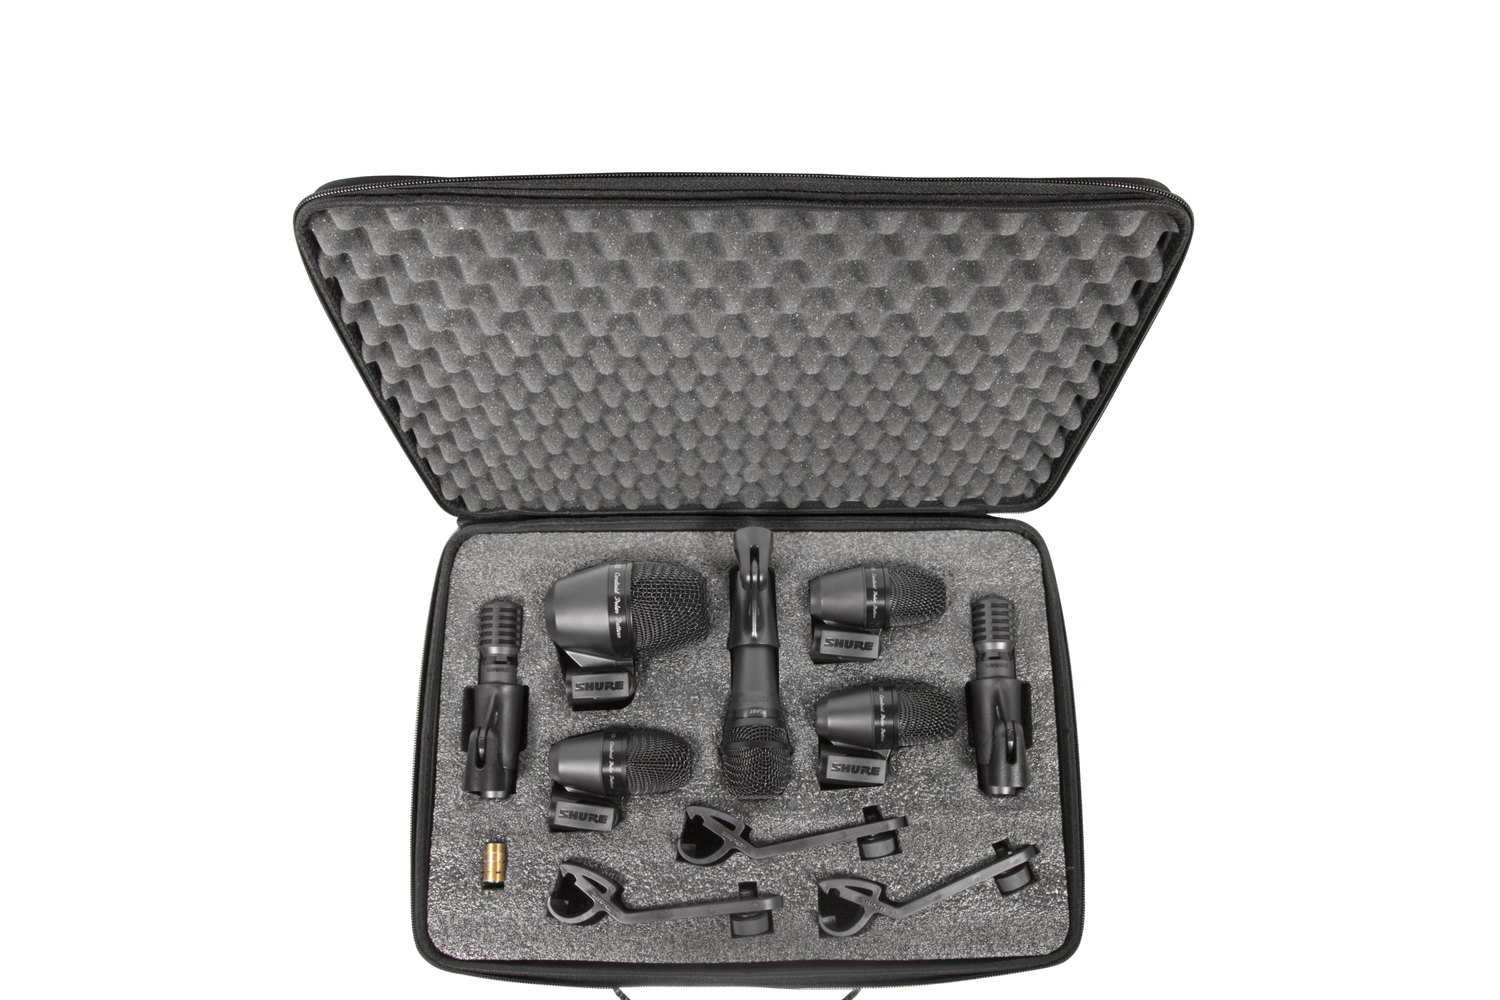 Shure Kit de Micrófonos para Bombos PGADRUMKIT7 Alámbrico